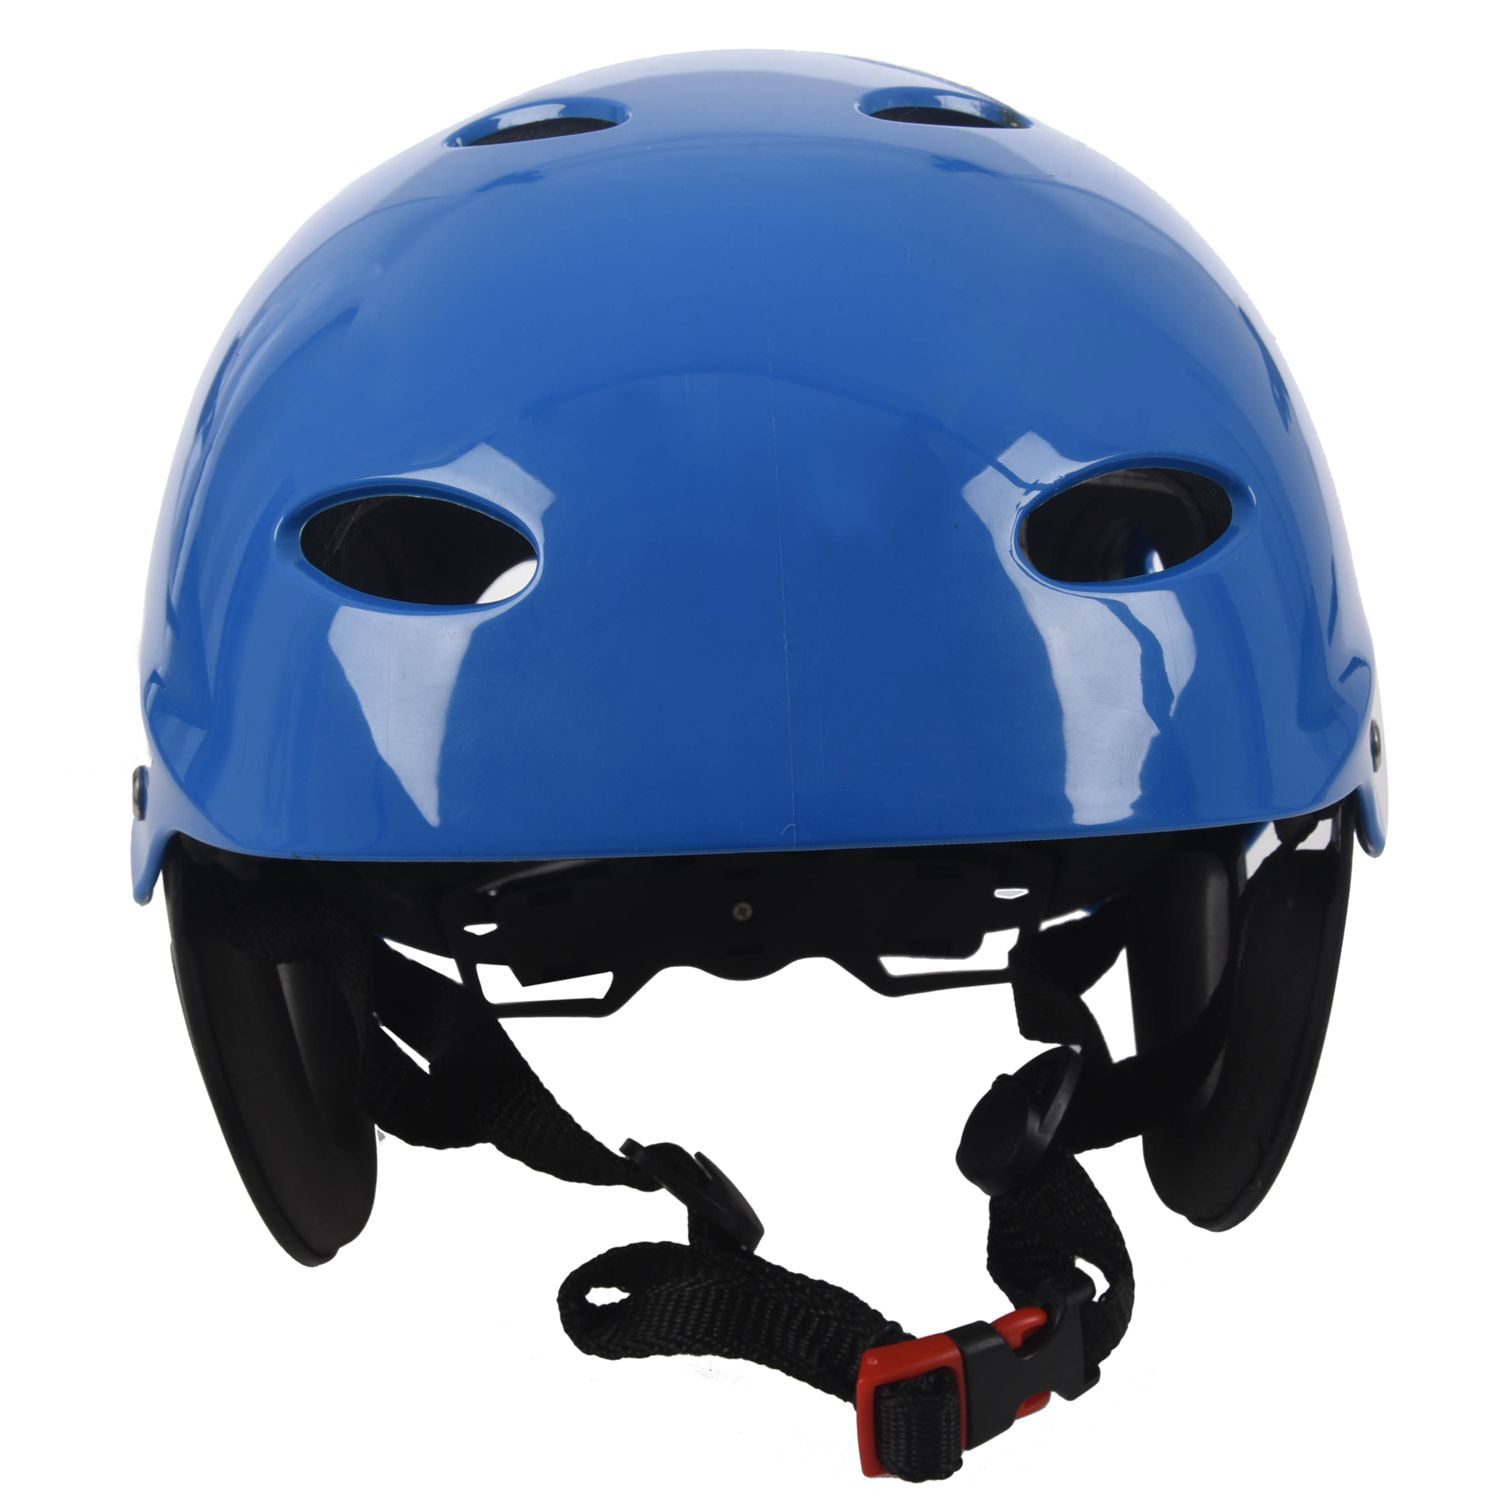 Etase Safety Protector Helmet 11 Breathing Holes for Water Sports Kayak Canoe Surf Paddleboard Blue